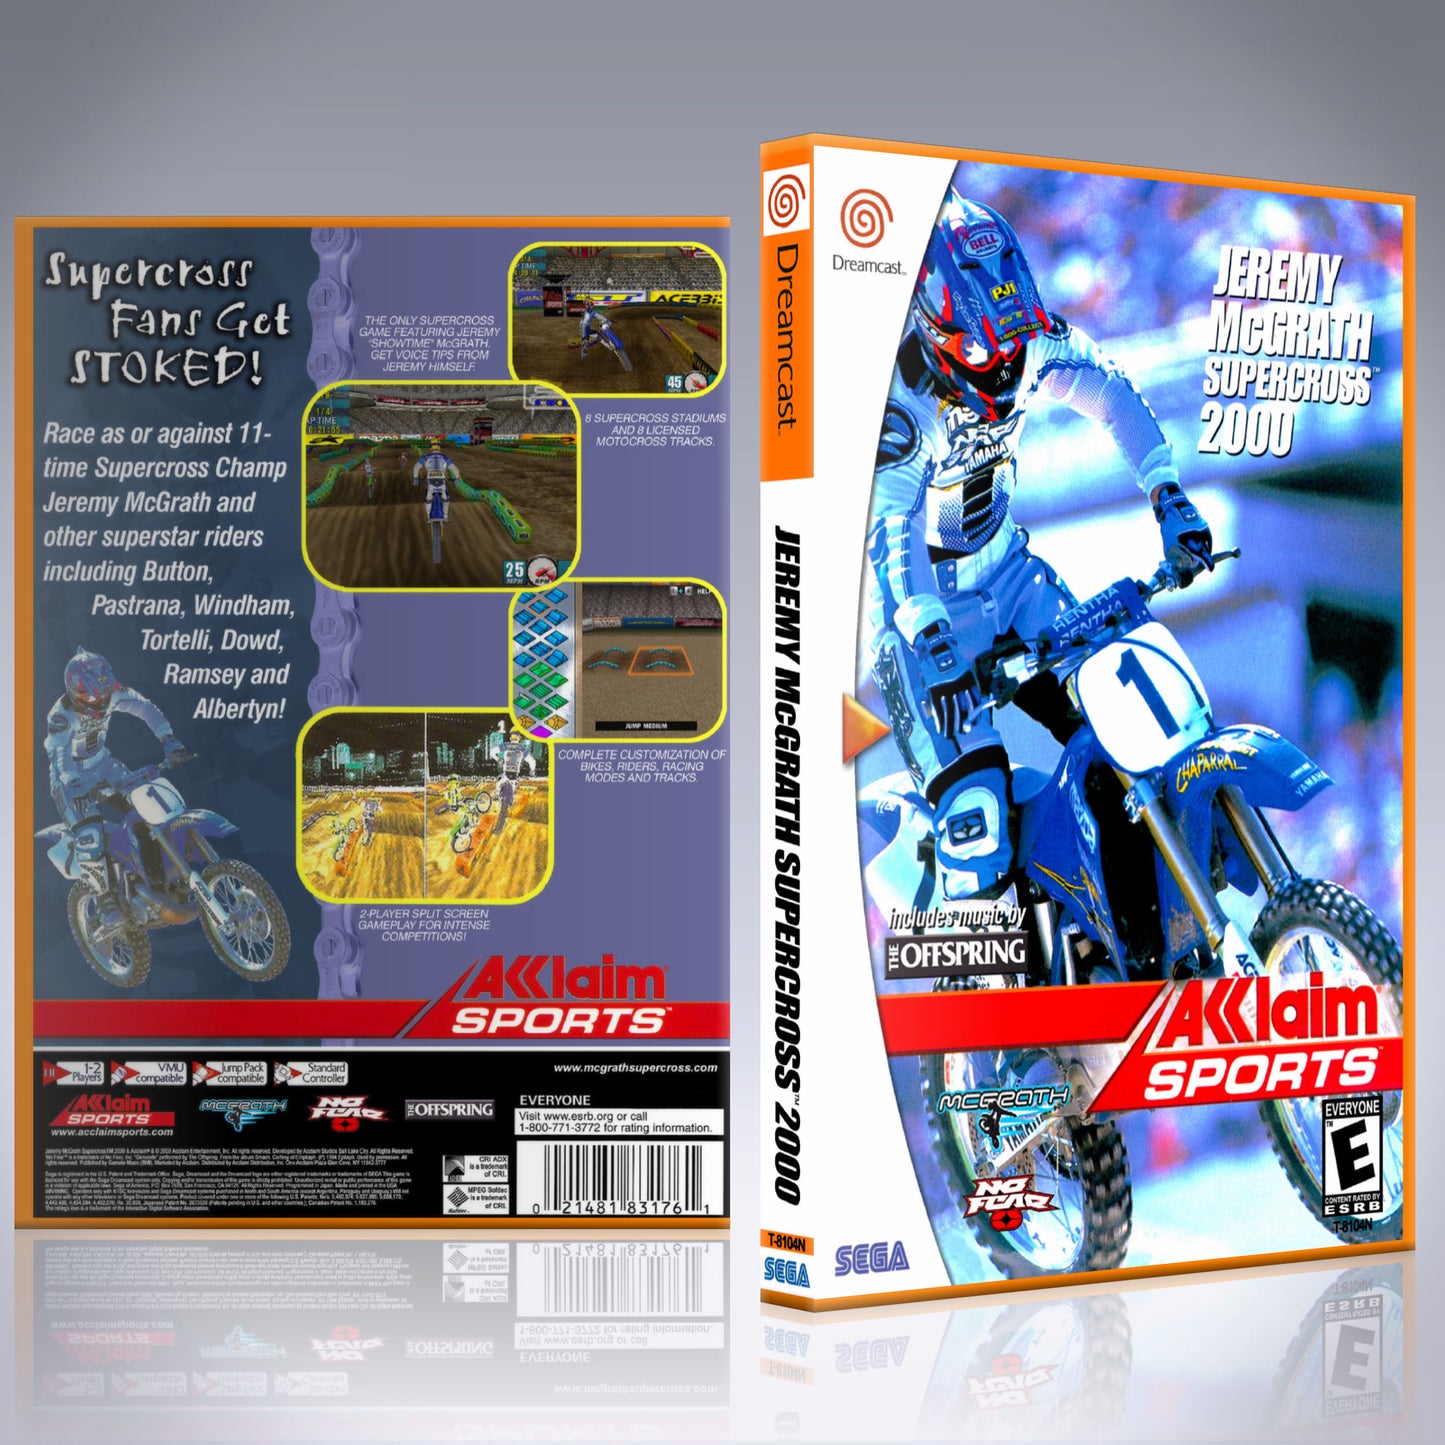 Dreamcast Custom Case - NO GAME - Jeremy McGrath Supercross 2000